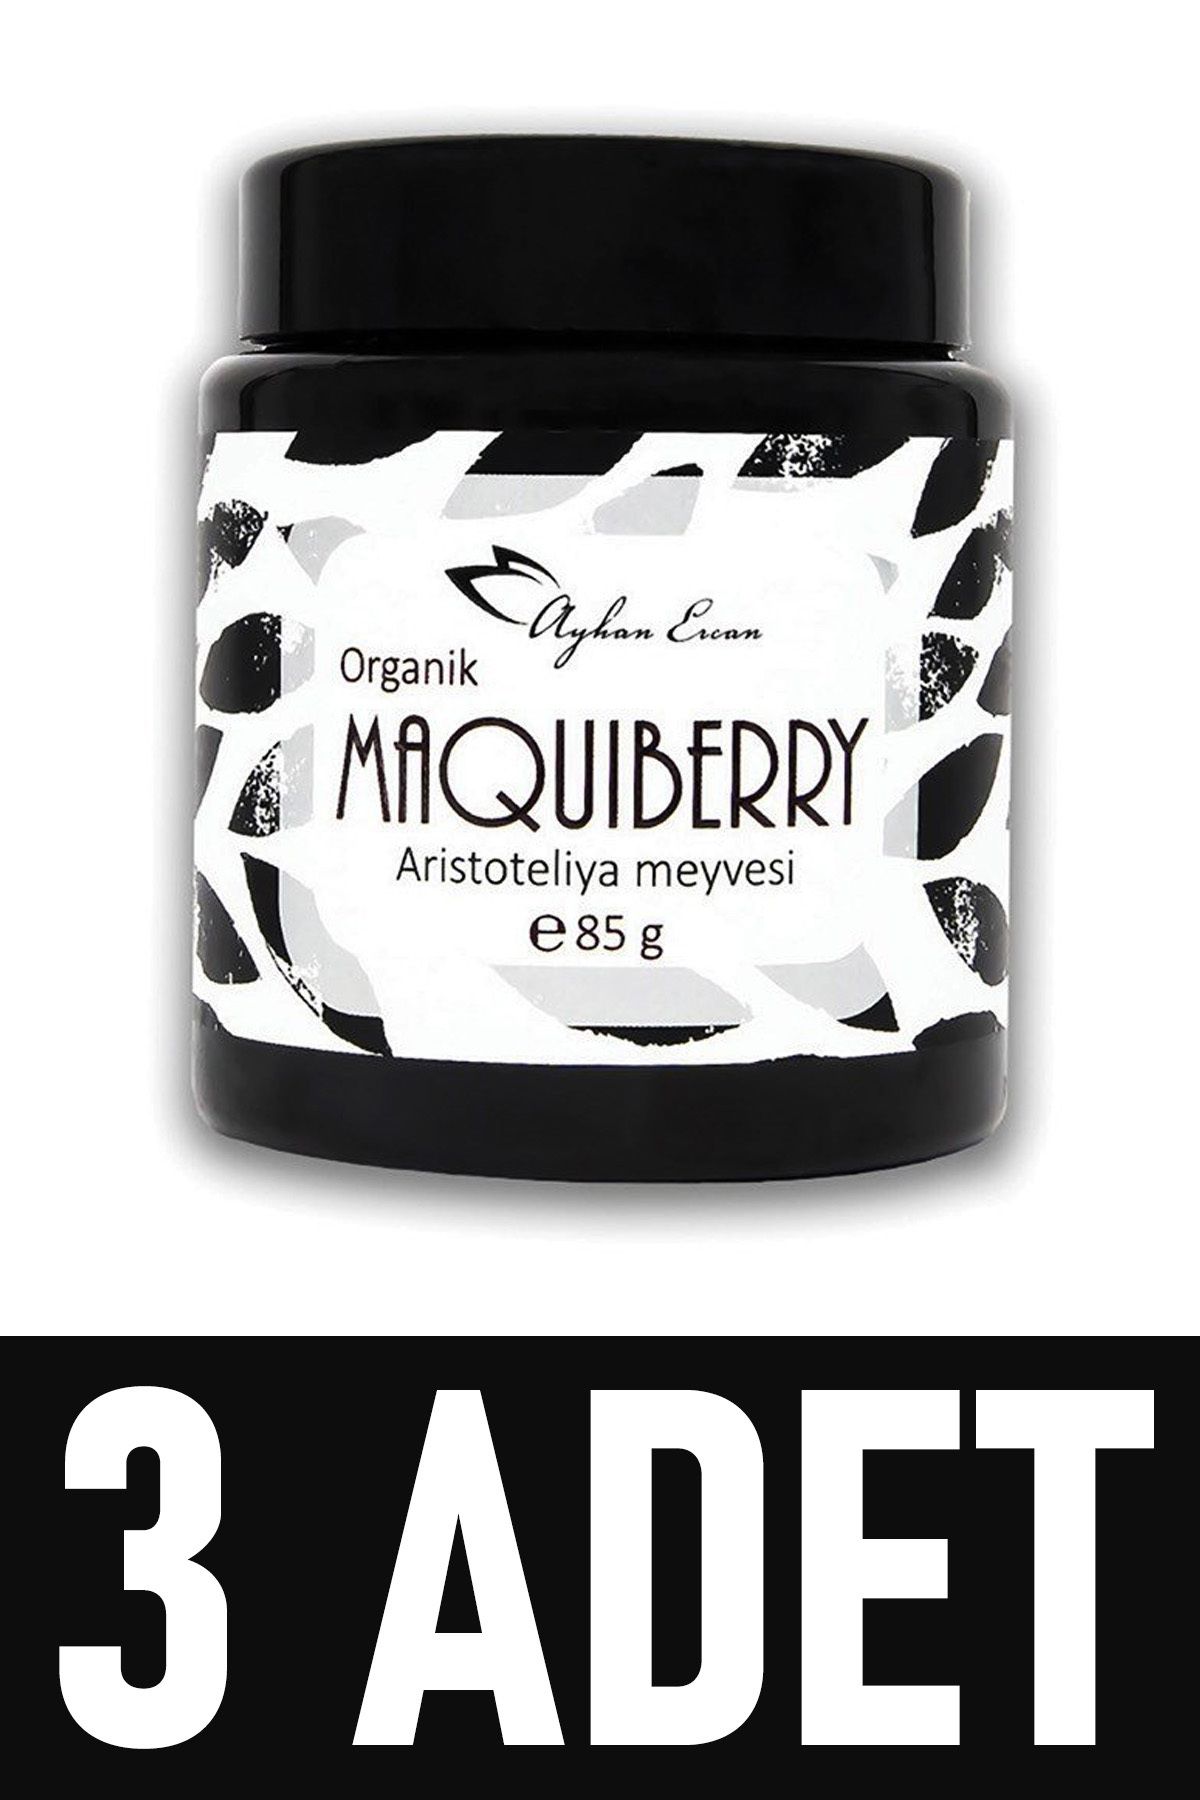 Ayhan Ercan Organik Maquiberry Meyvesi Tozu 85 gr 3 Adet